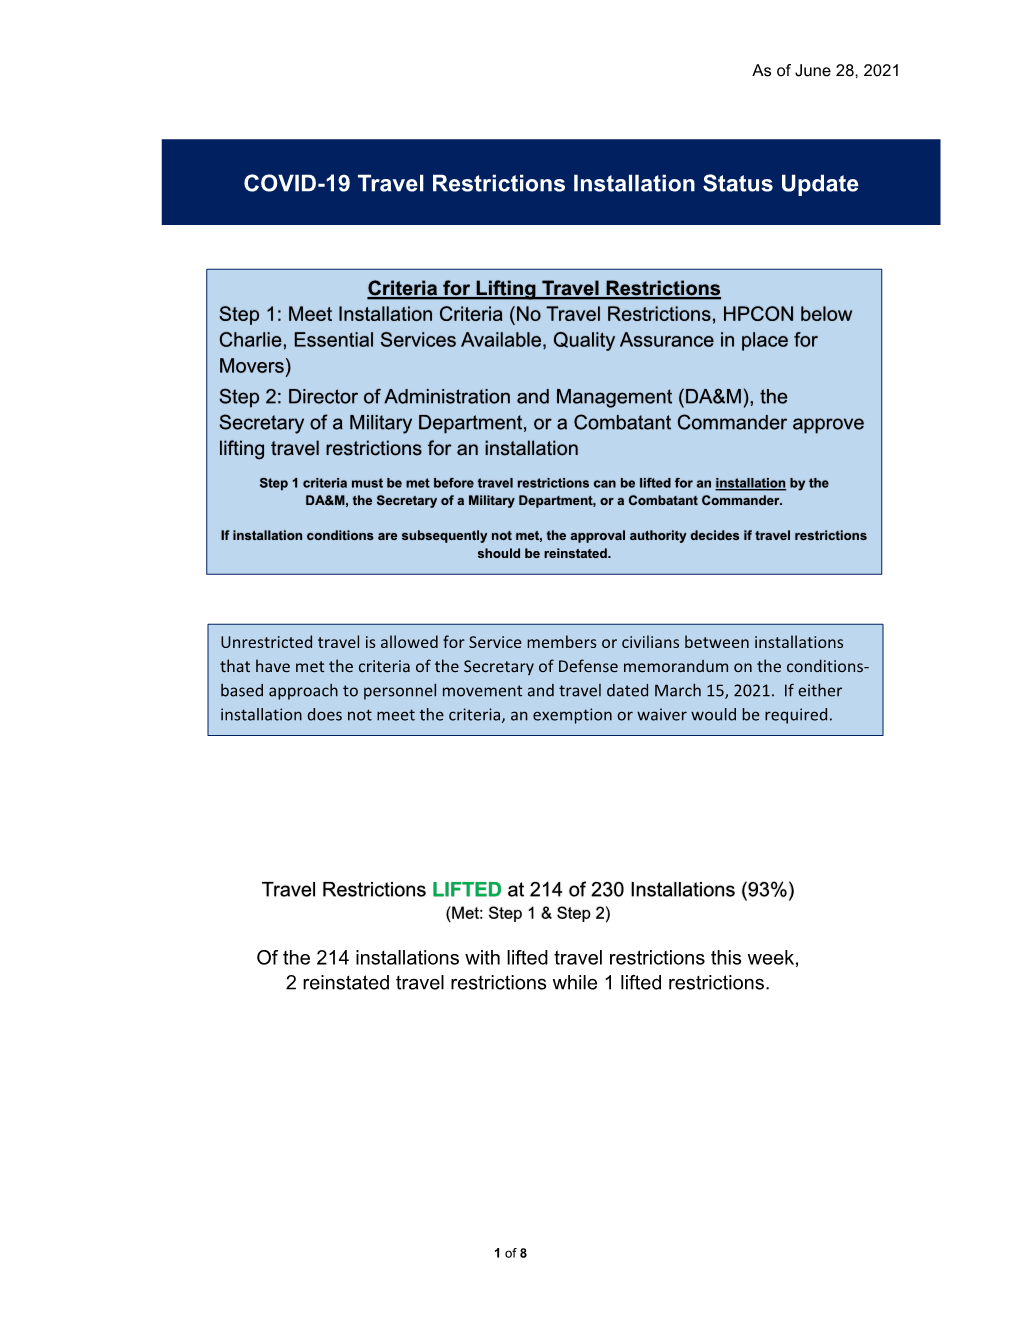 COVID-19 Travel Restrictions Installation Status Update, June 30